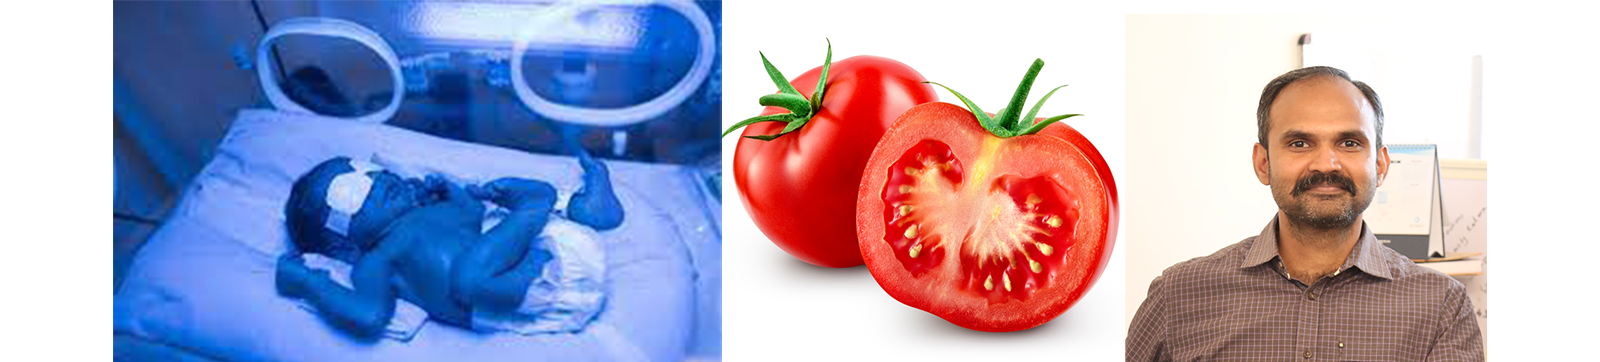 INST, Mohali, Develops Oximeter to Determine Jaundice in New-Borns; Lycopene Sensors to Test Tomatoes